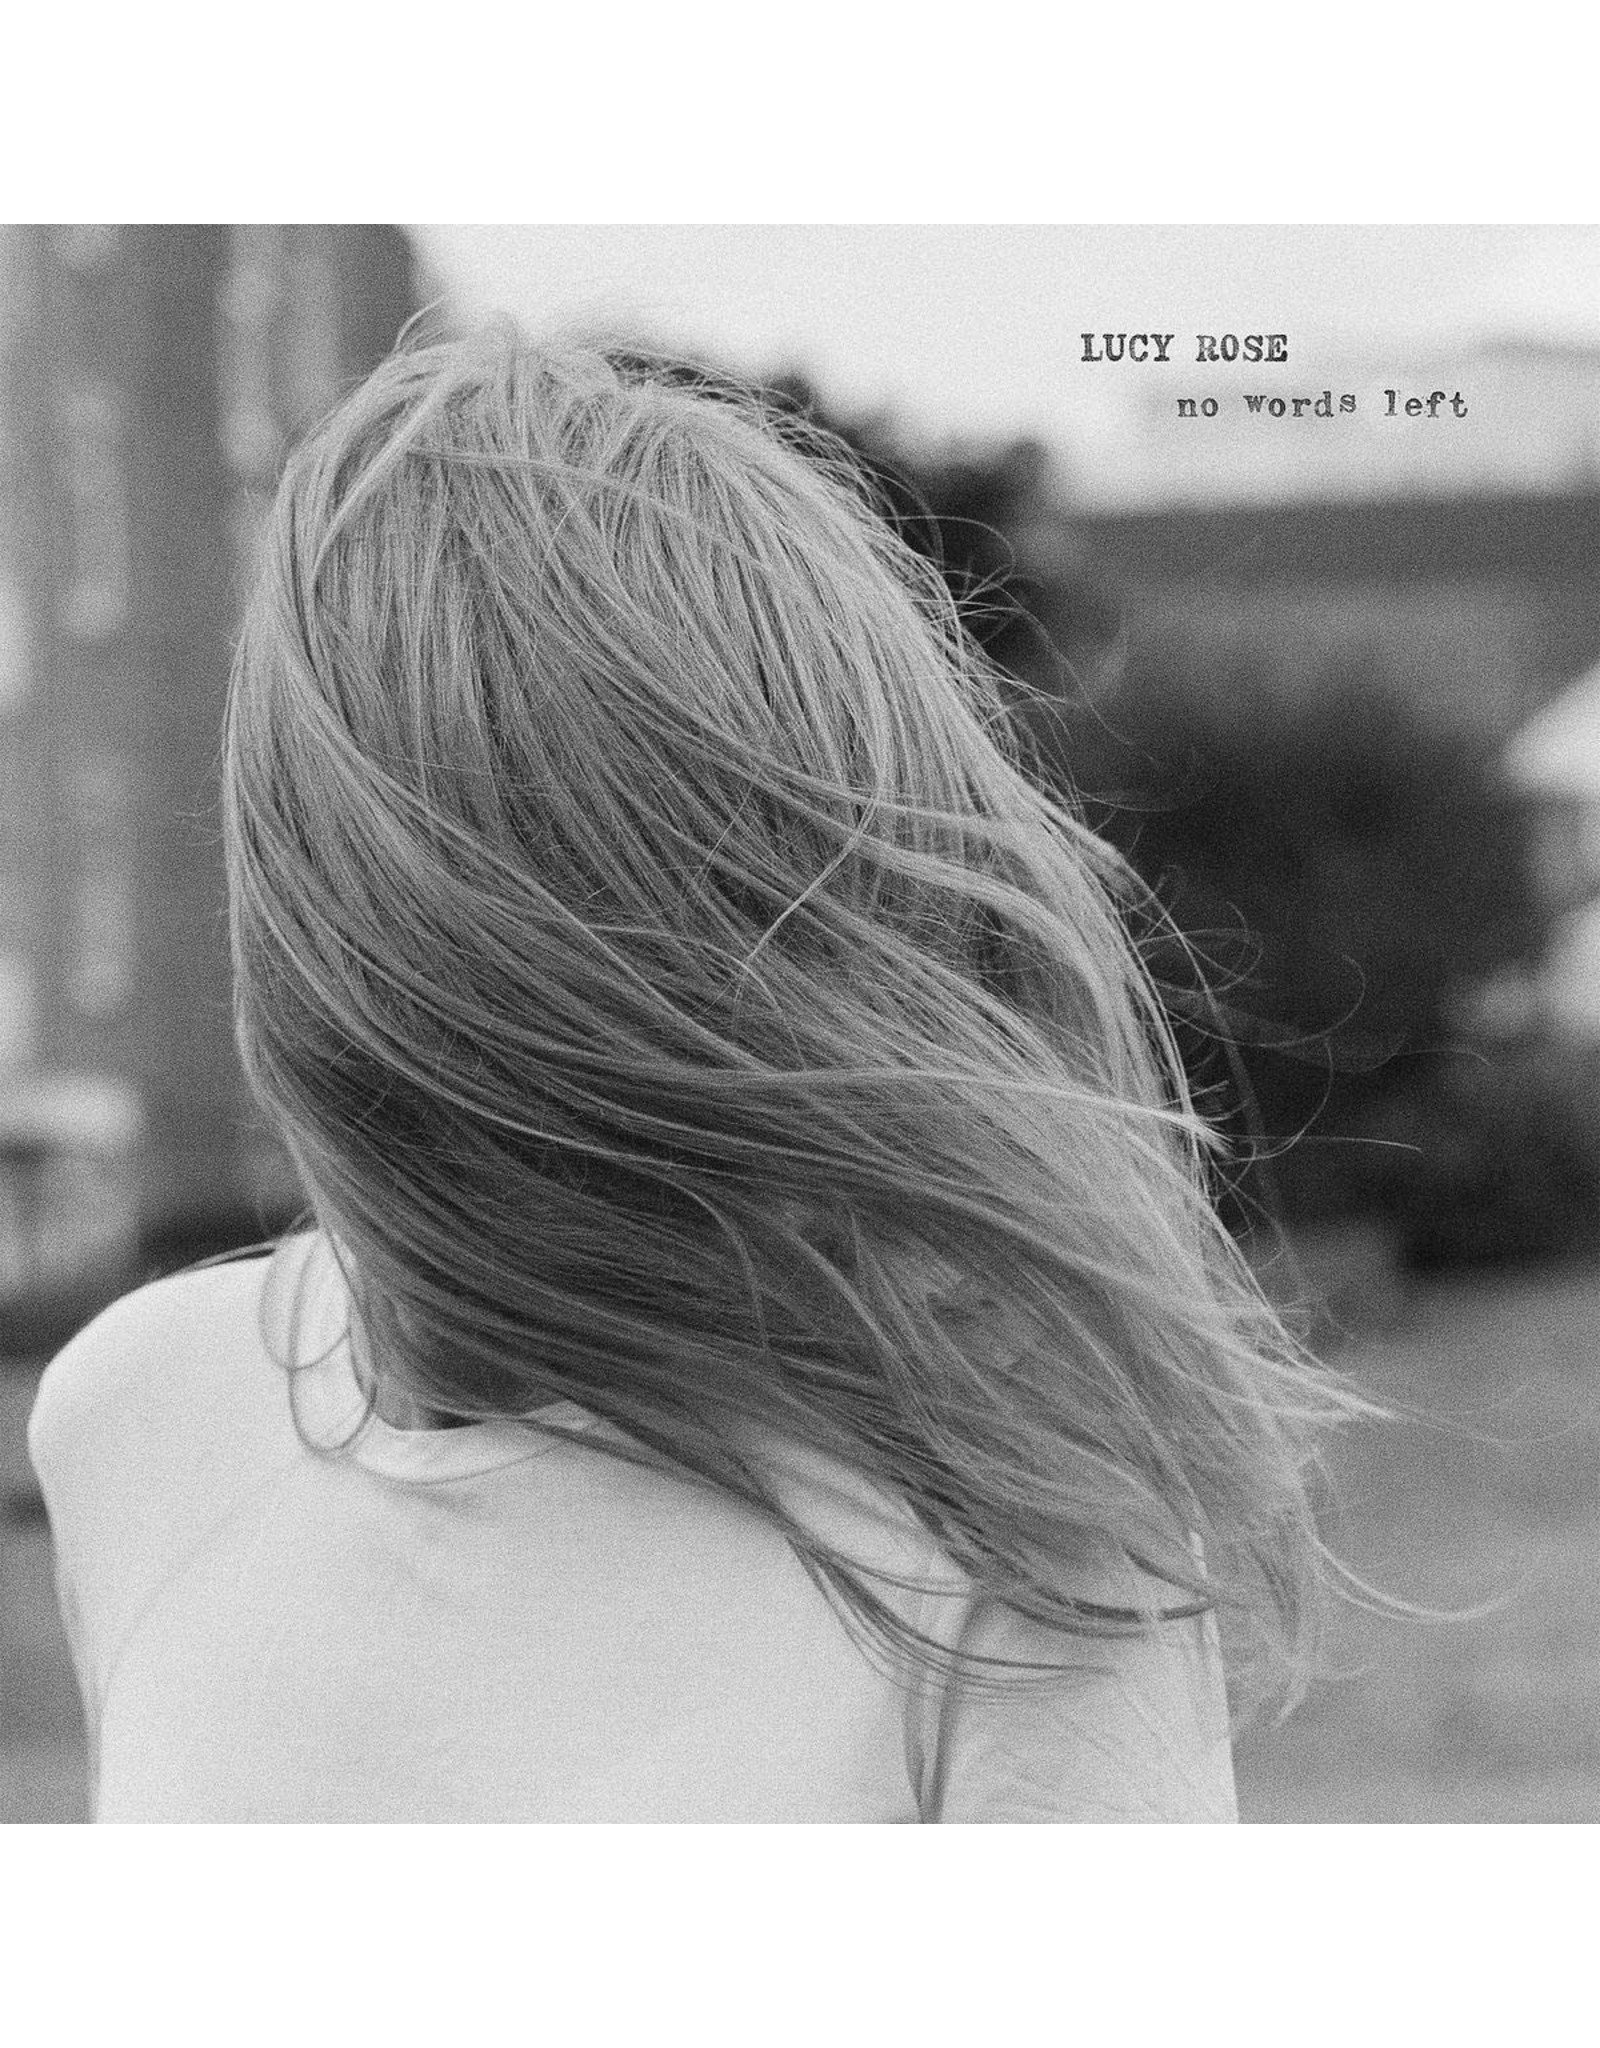 Rose, Lucy - No Words Left LP